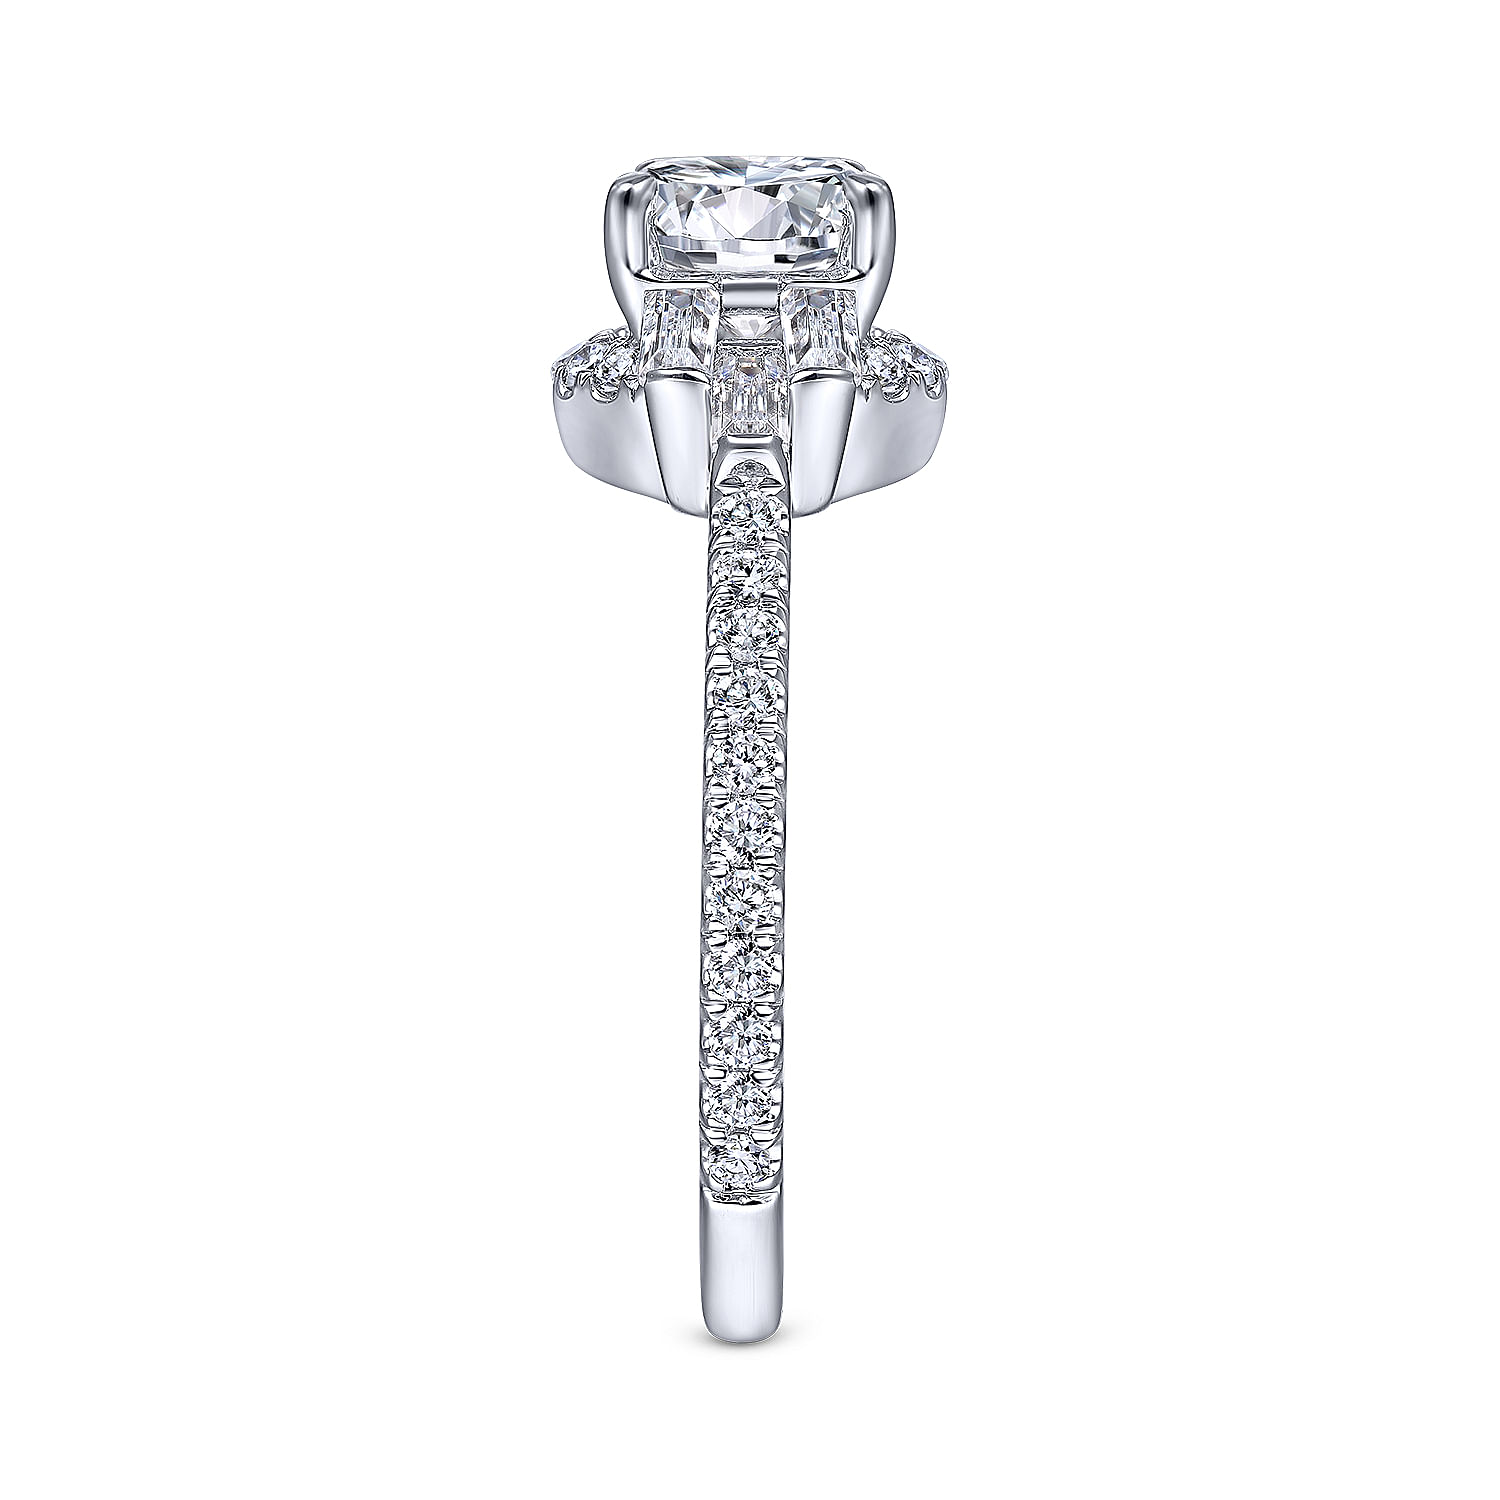 Art Deco 14K White Gold Round Halo Diamond Channel Set Engagement Ring